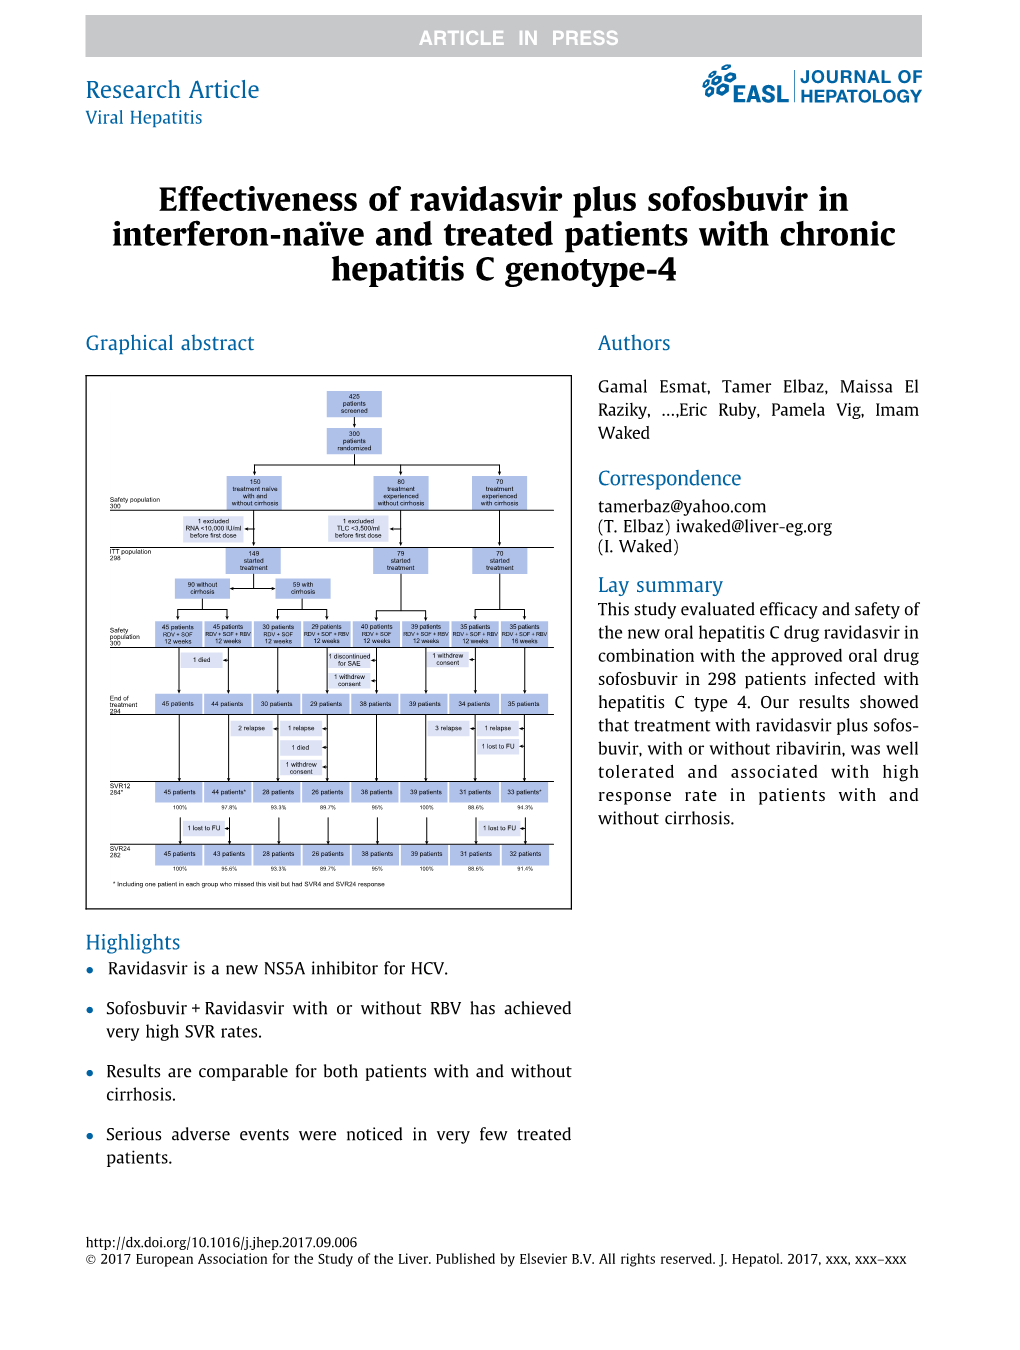 Effectiveness of Ravidasvir Plus Sofosbuvir in Interferon-Naïve and Treated Patients with Chronic Hepatitis C Genotype-4